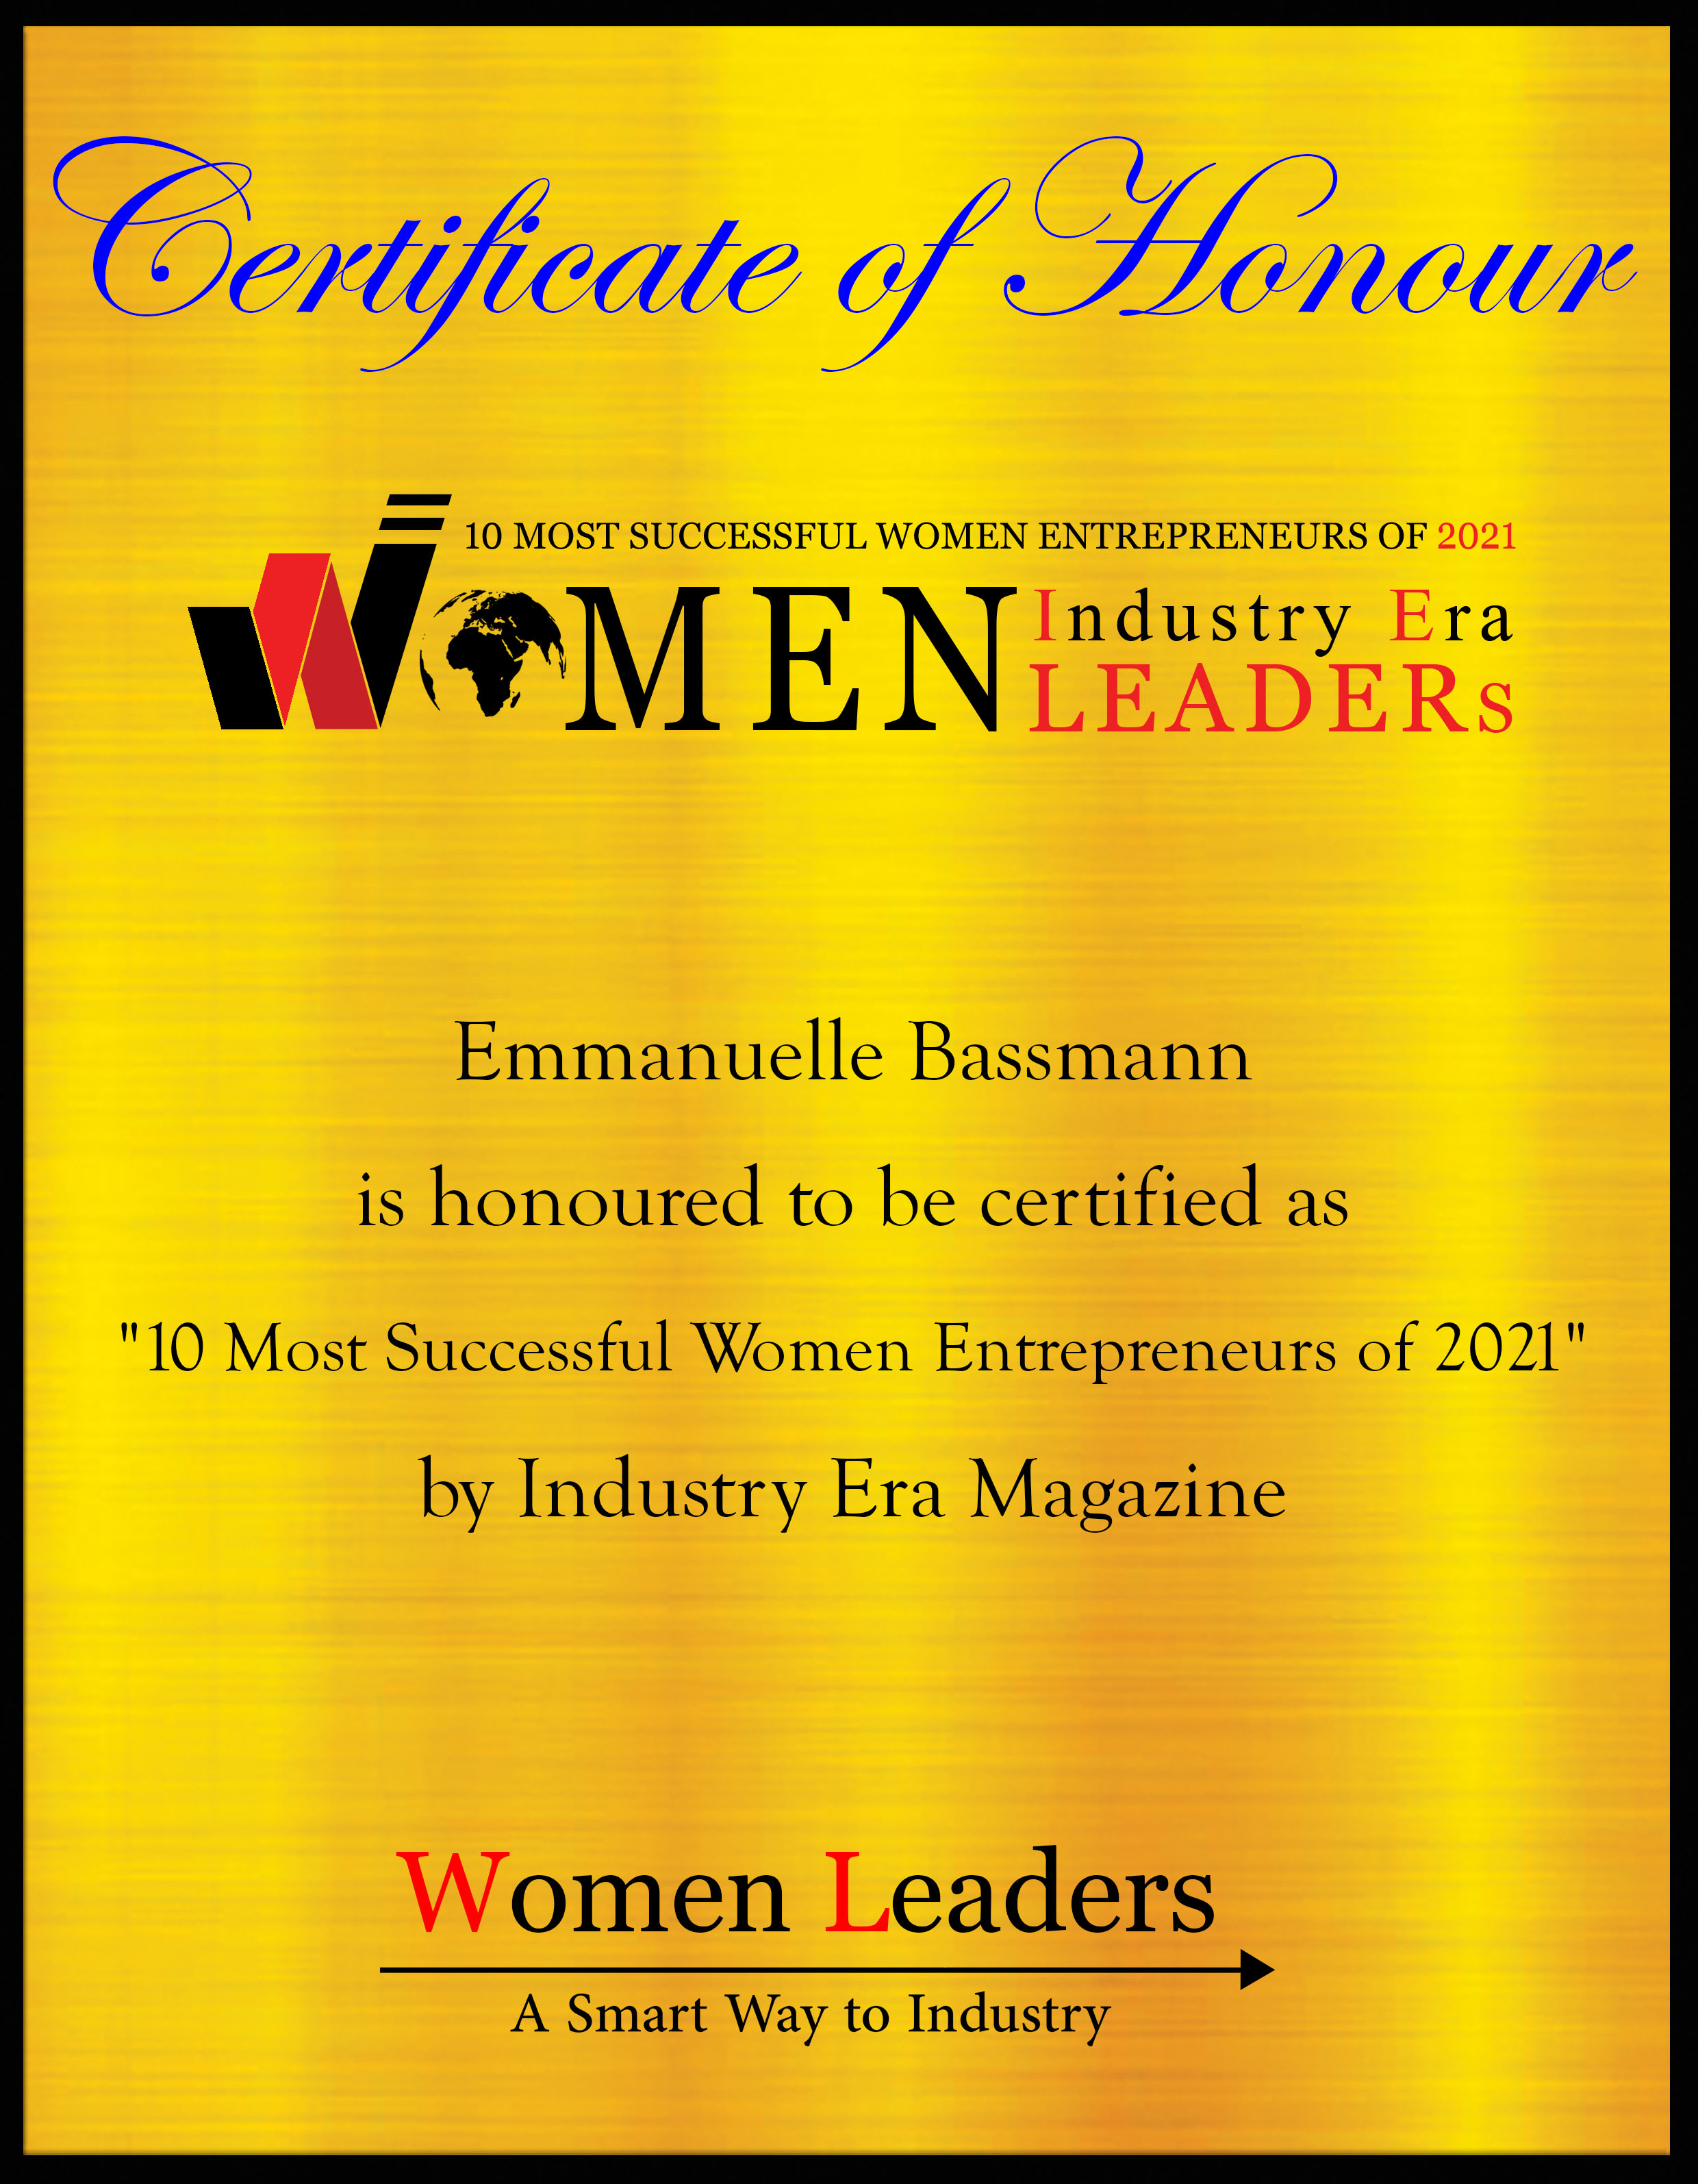 Emmanuelle Bassmann, Founder & Managing Director of In-Trend, Most Successful Women Entrepreneurs of 2021